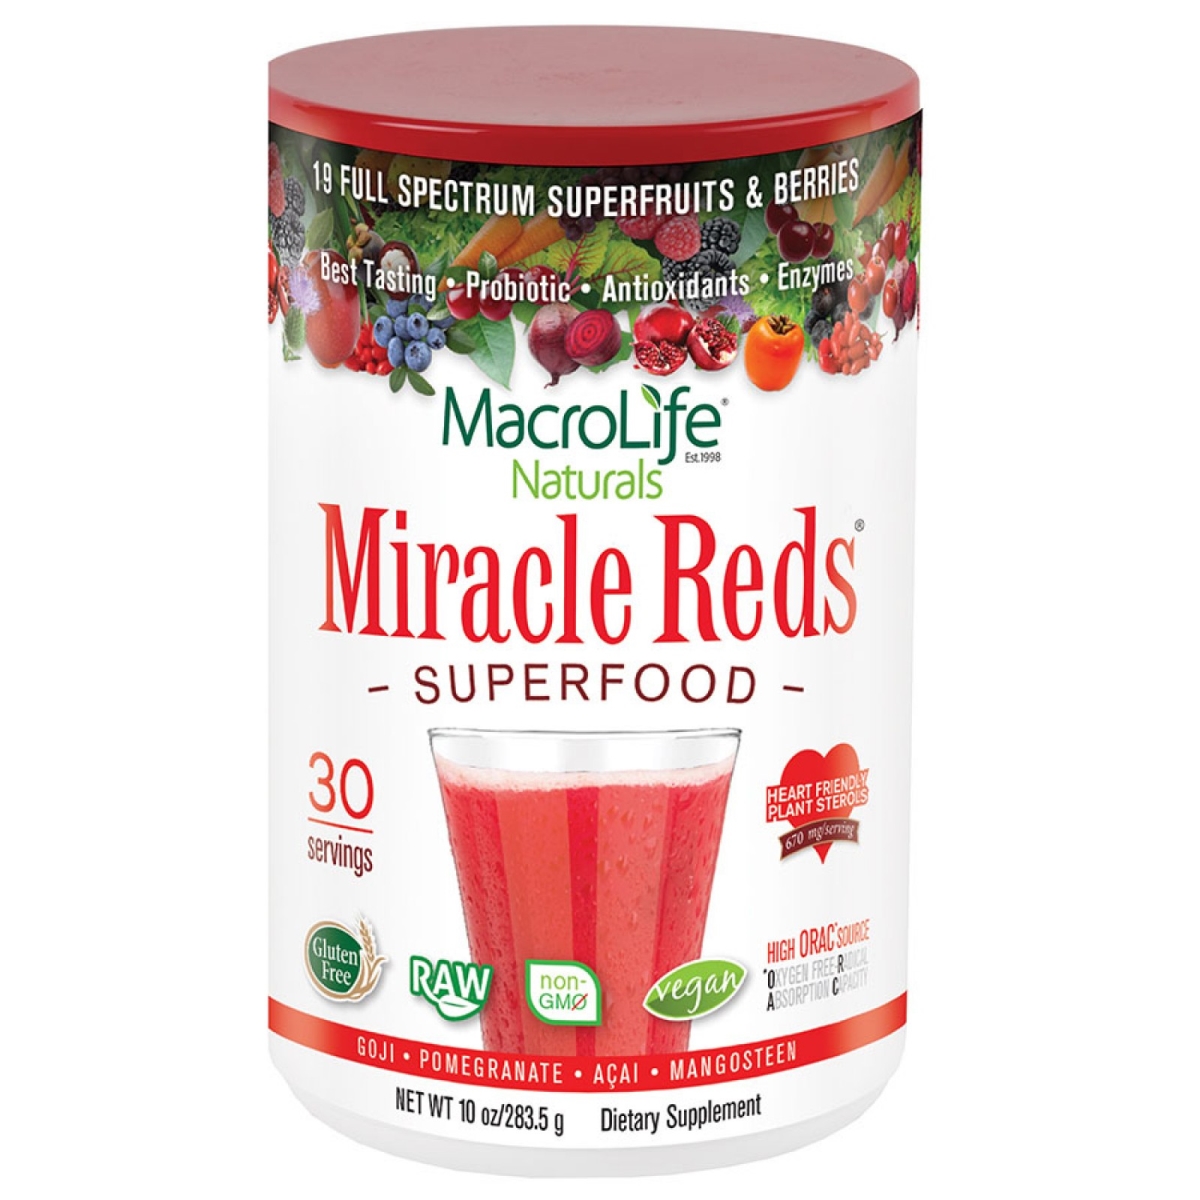 228397 10 Oz Macrolife Naturals Miracle Reds Super Food Supplements - 30 Servings